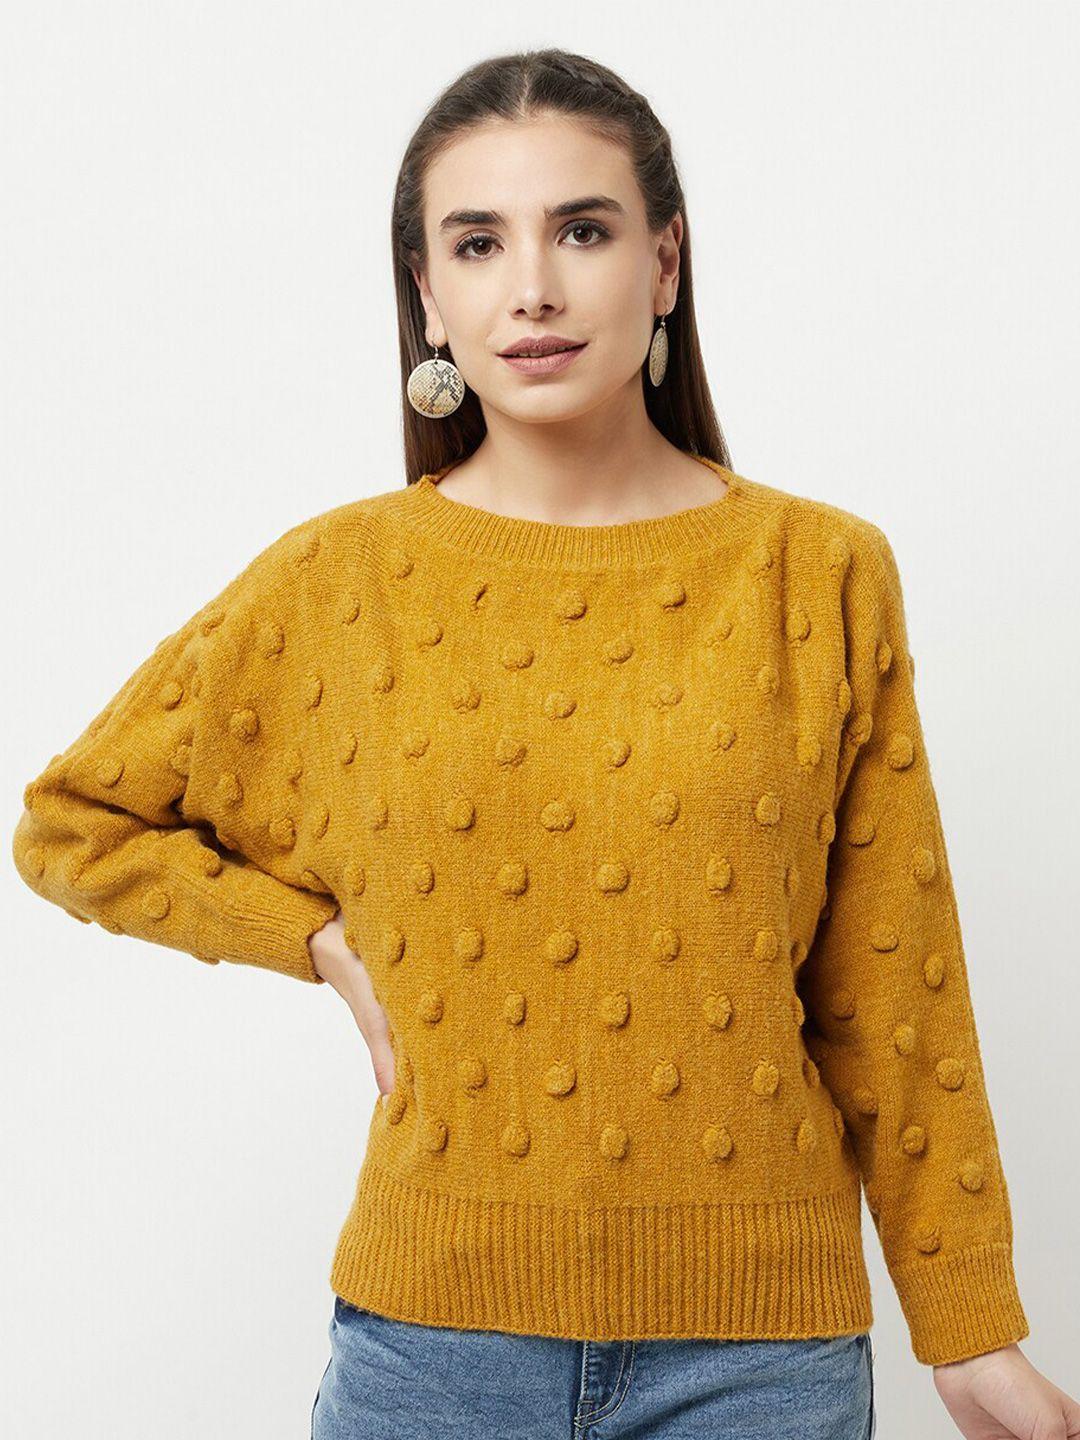 knitstudio self designed woollen pullover